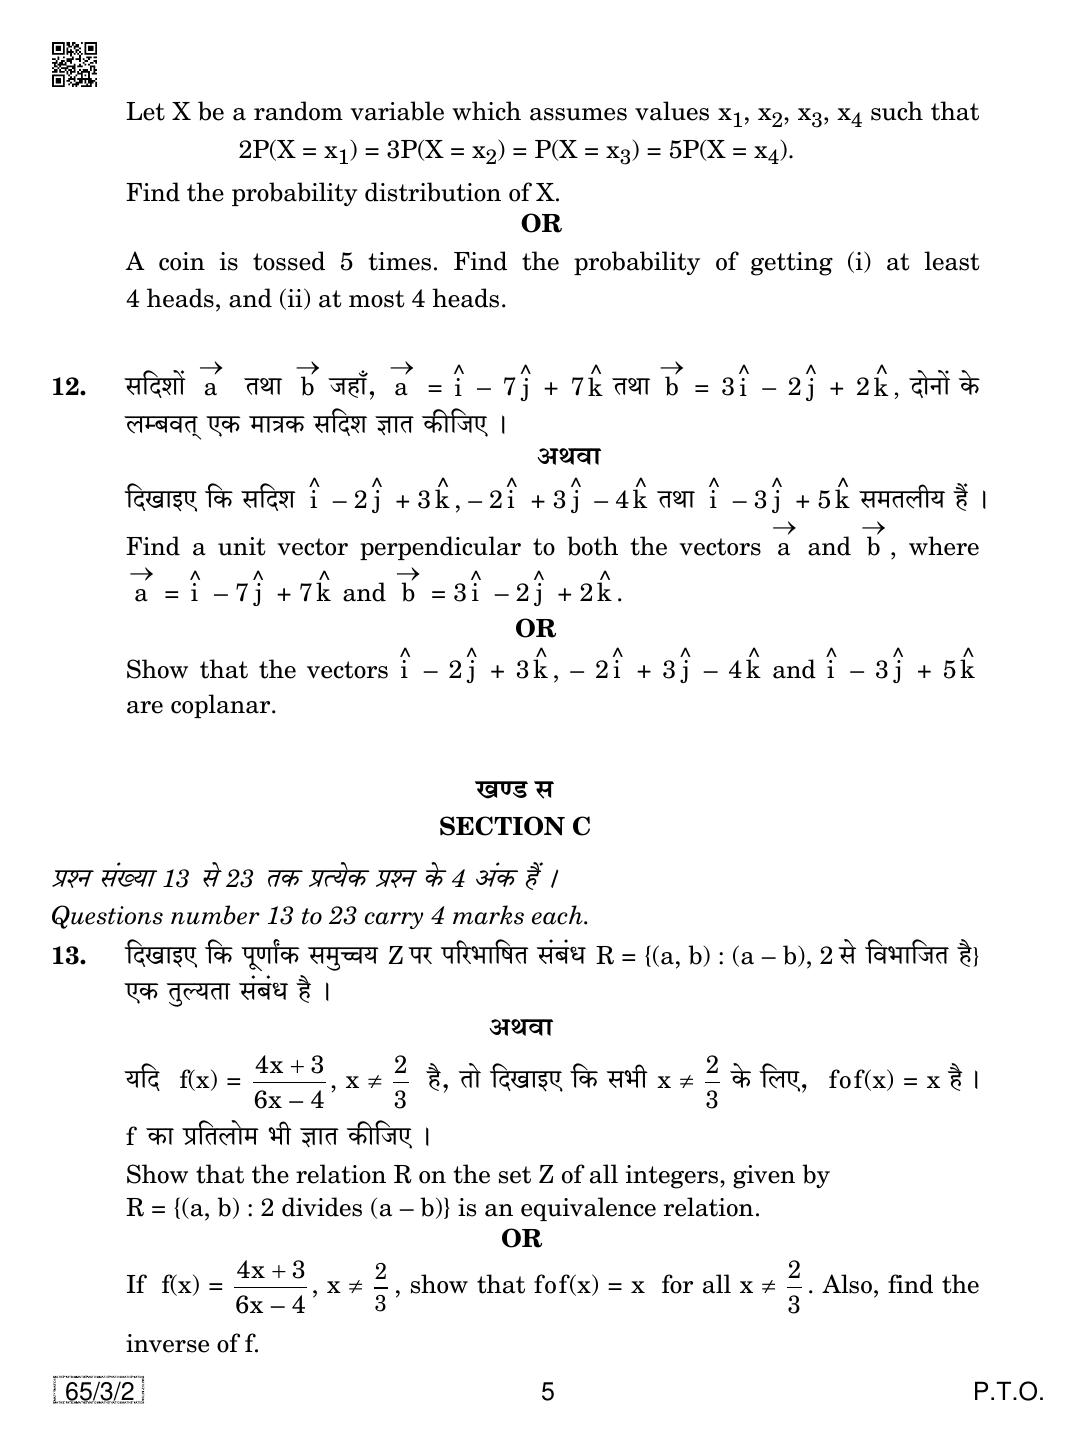 CBSE Class 12 65-3-2 Mathematics 2019 Question Paper - Page 5